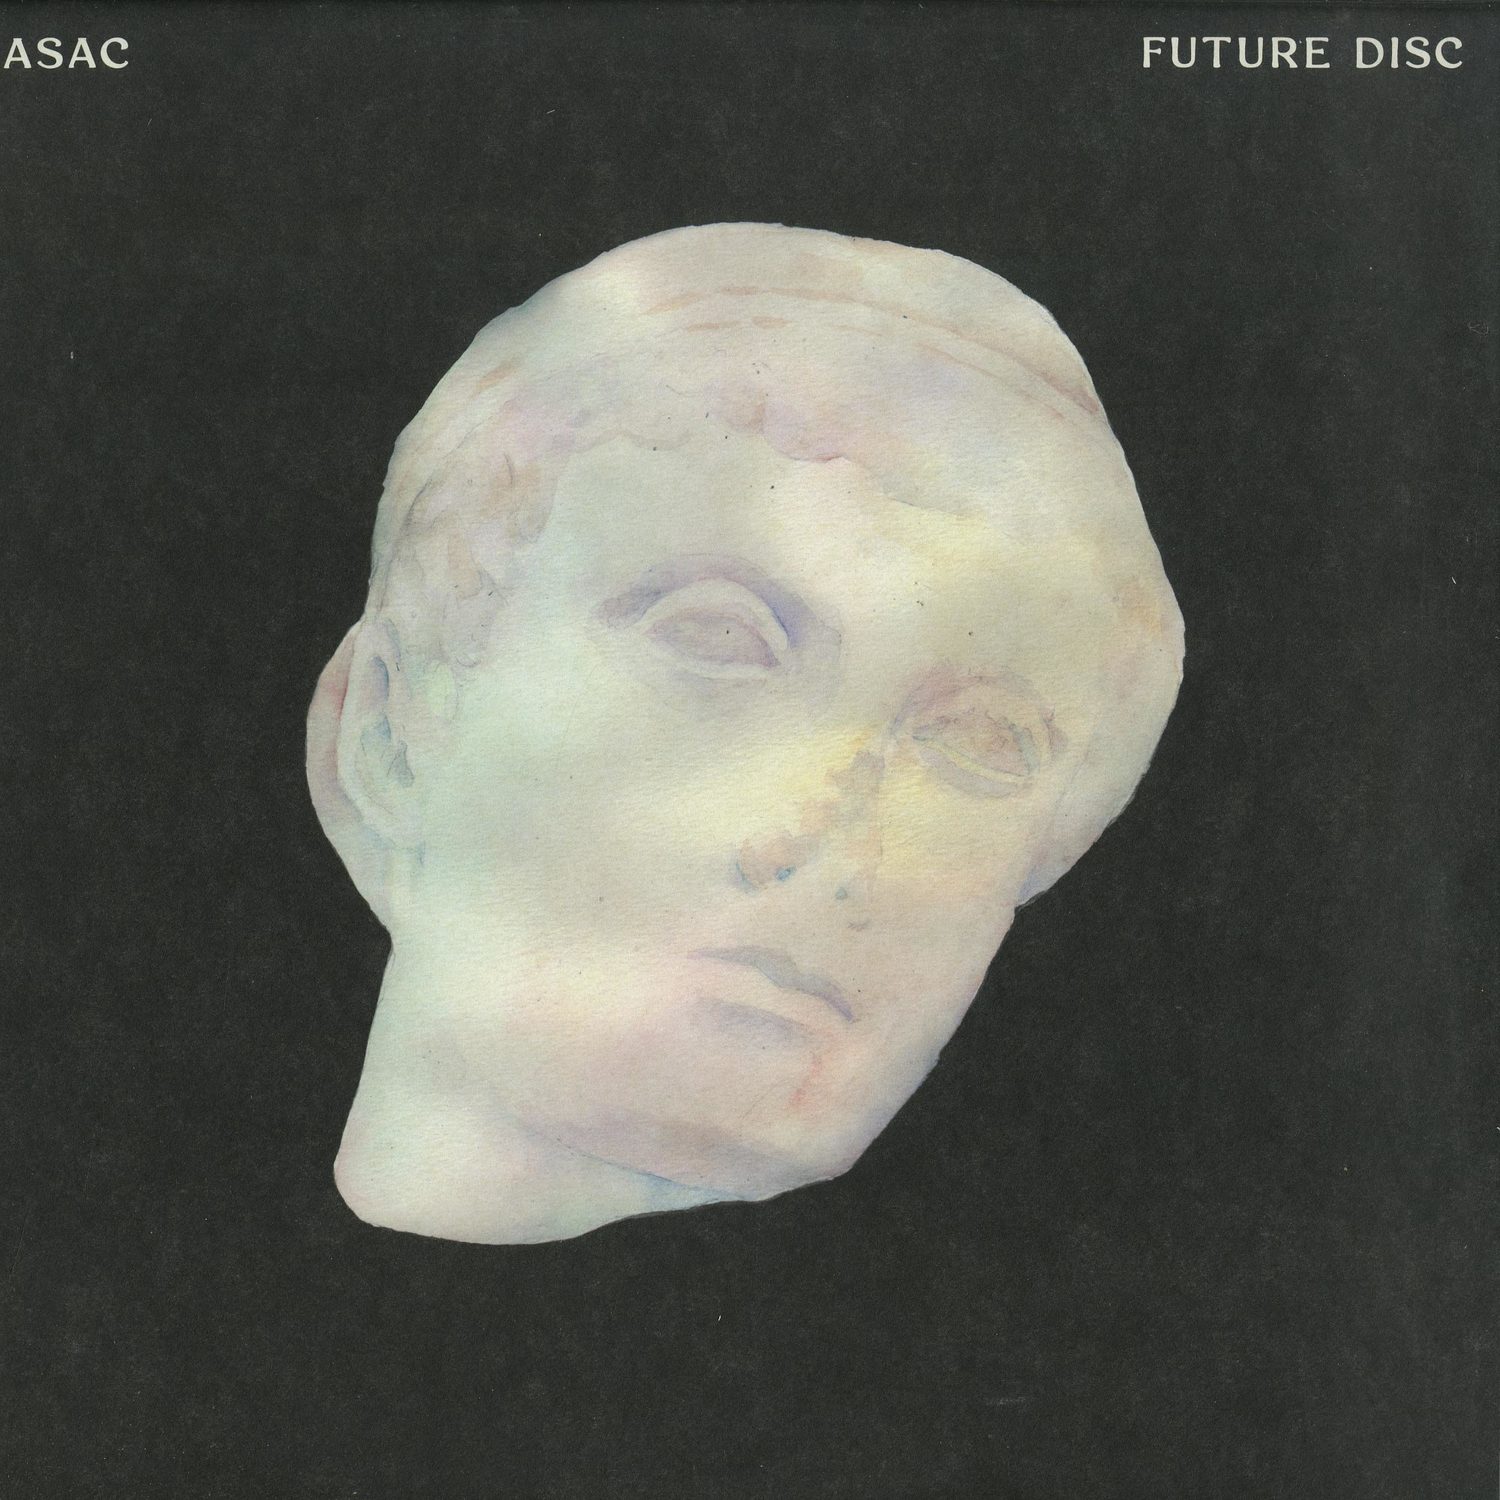 Sasac - FUTURE DISC LP